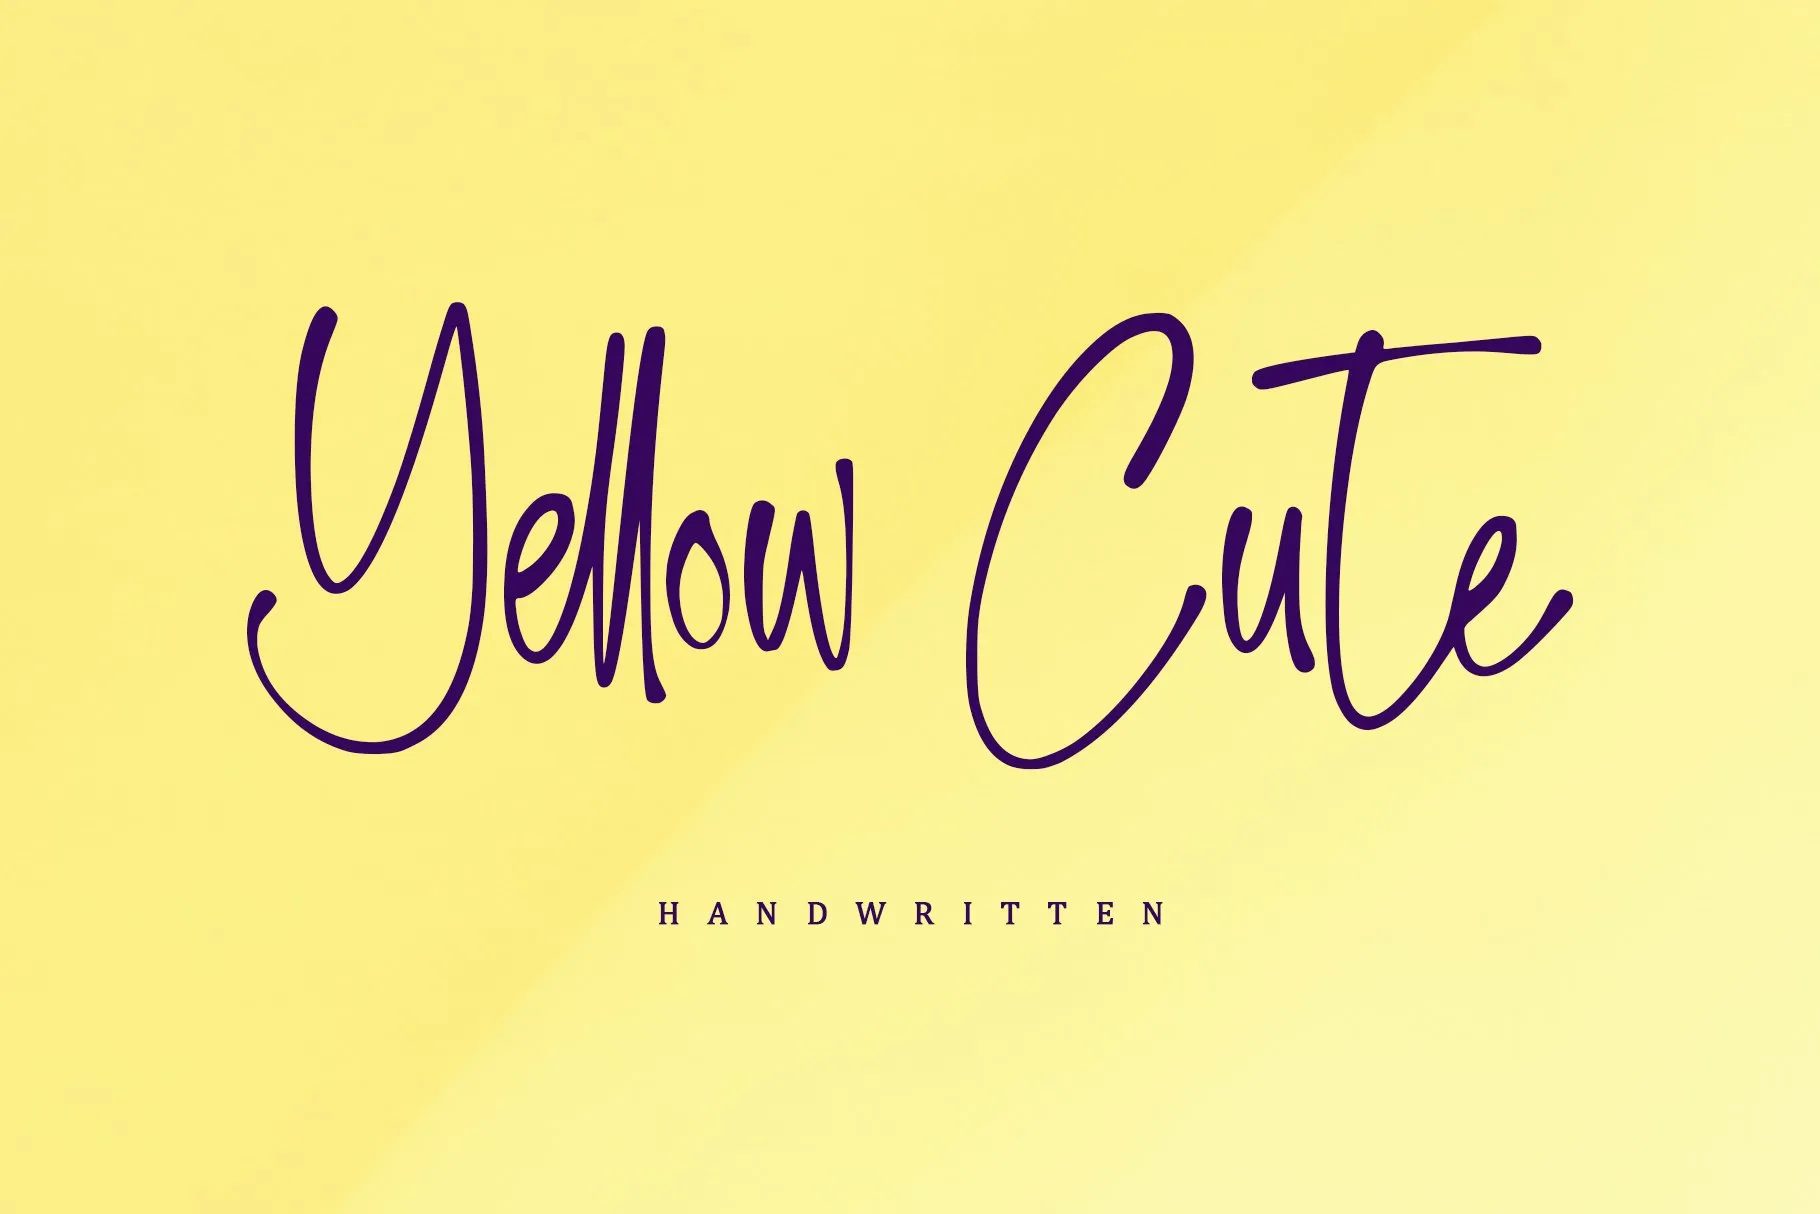 Yellow Cute Font